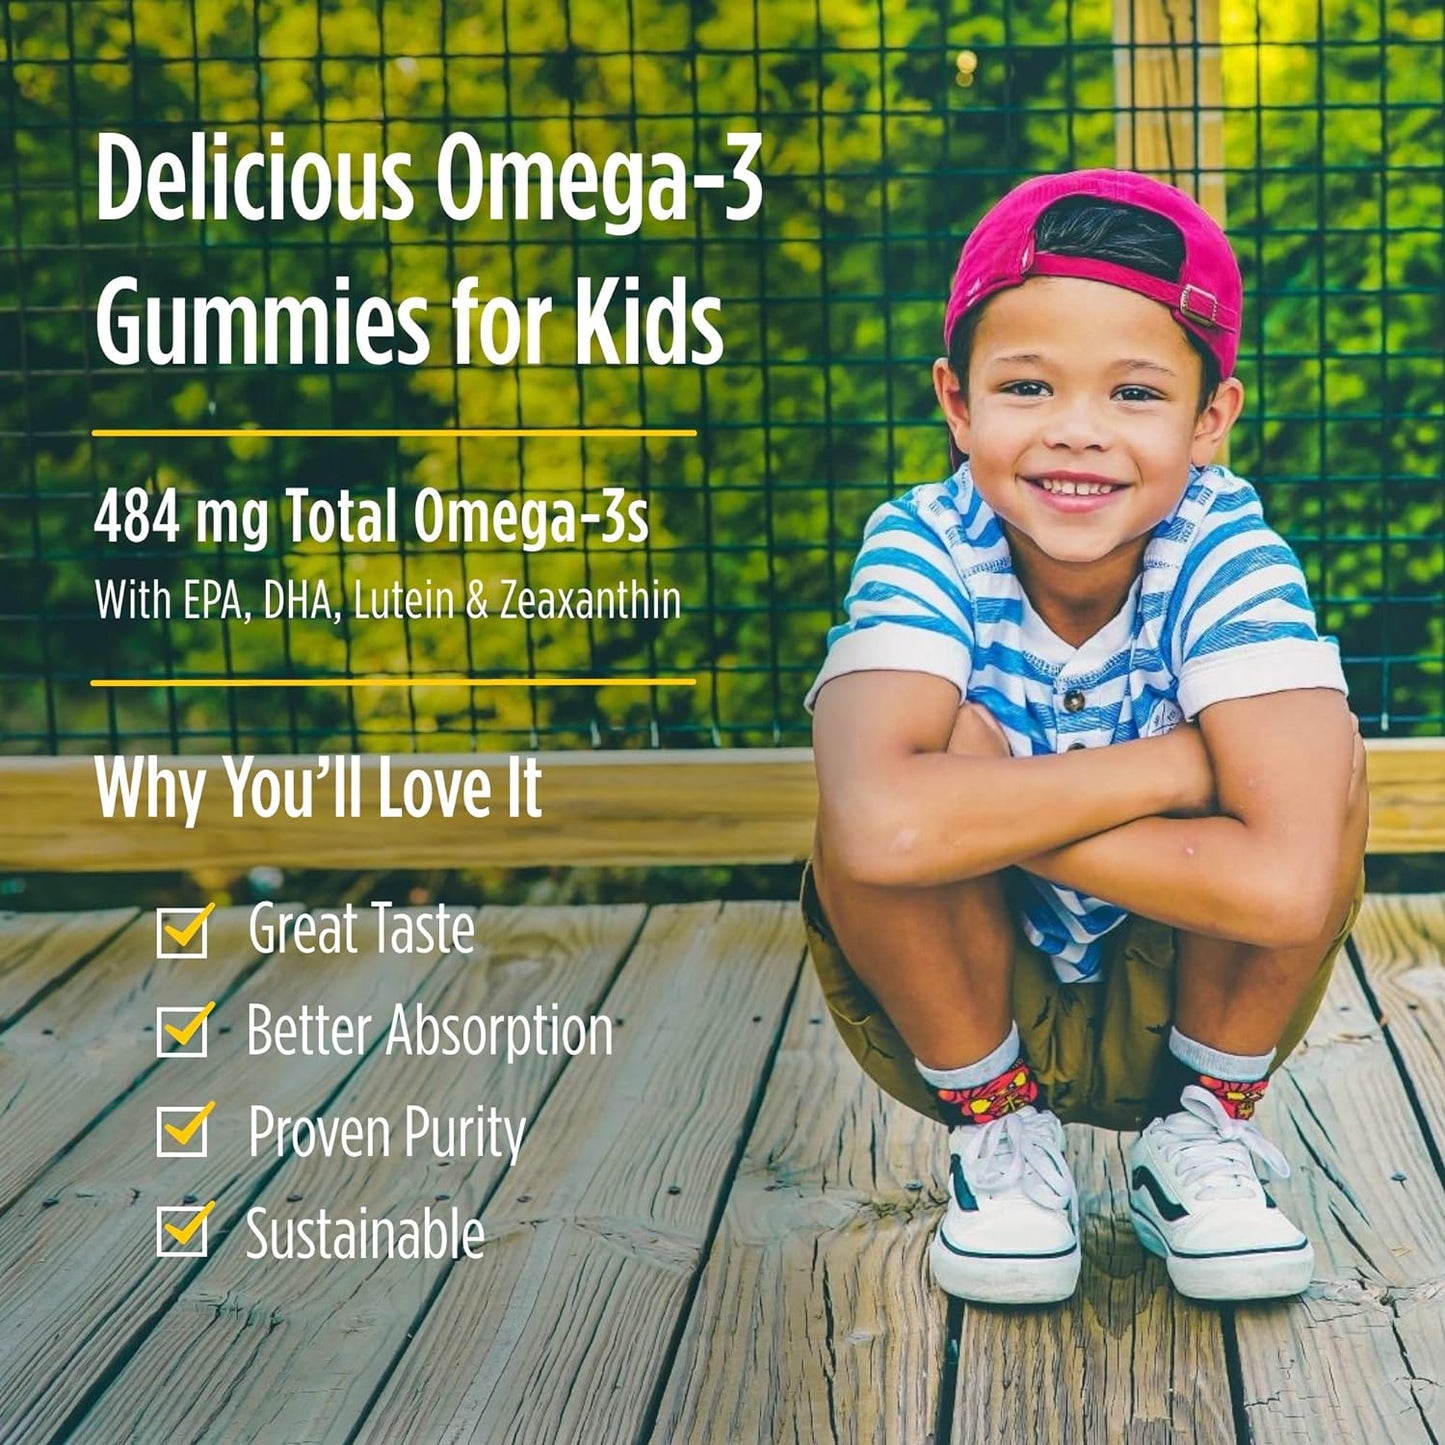 Nordic Naturals Children’s Eye Health Gummies, Strawberry Lemonade for Kids - 484 mg Total Omega-3s DHA, Lutein & Zeaxanthin - Brain Health, Antioxidant Support, 30 Gummies